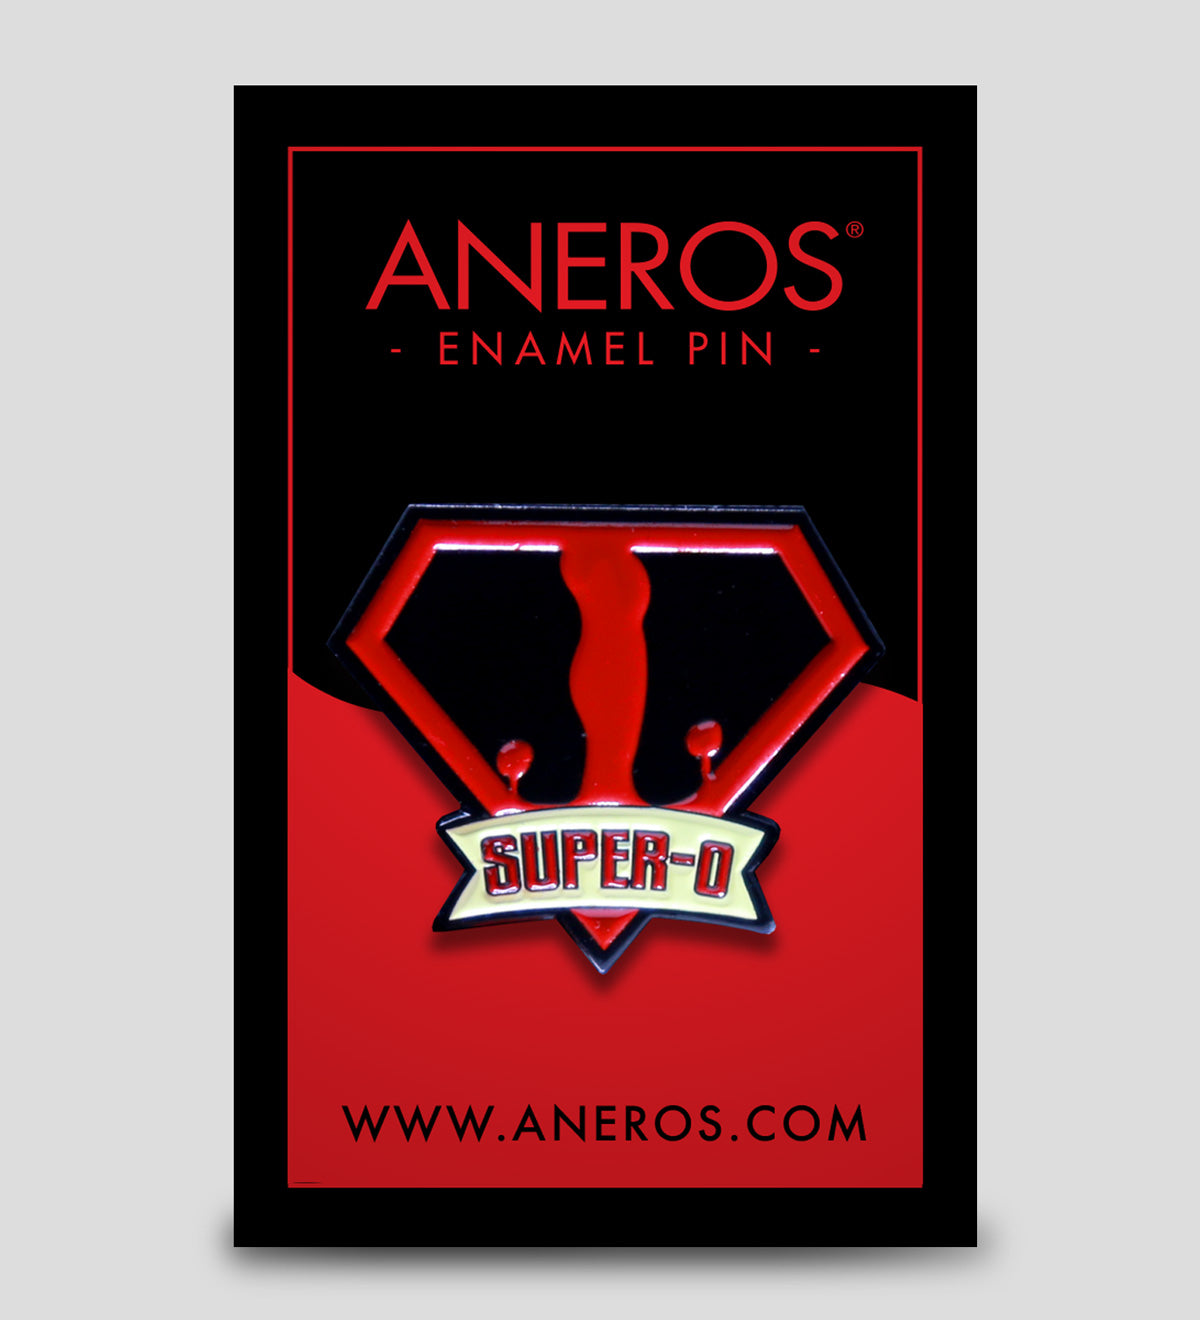 Aneros Super O Enamel Pin Packaged Image